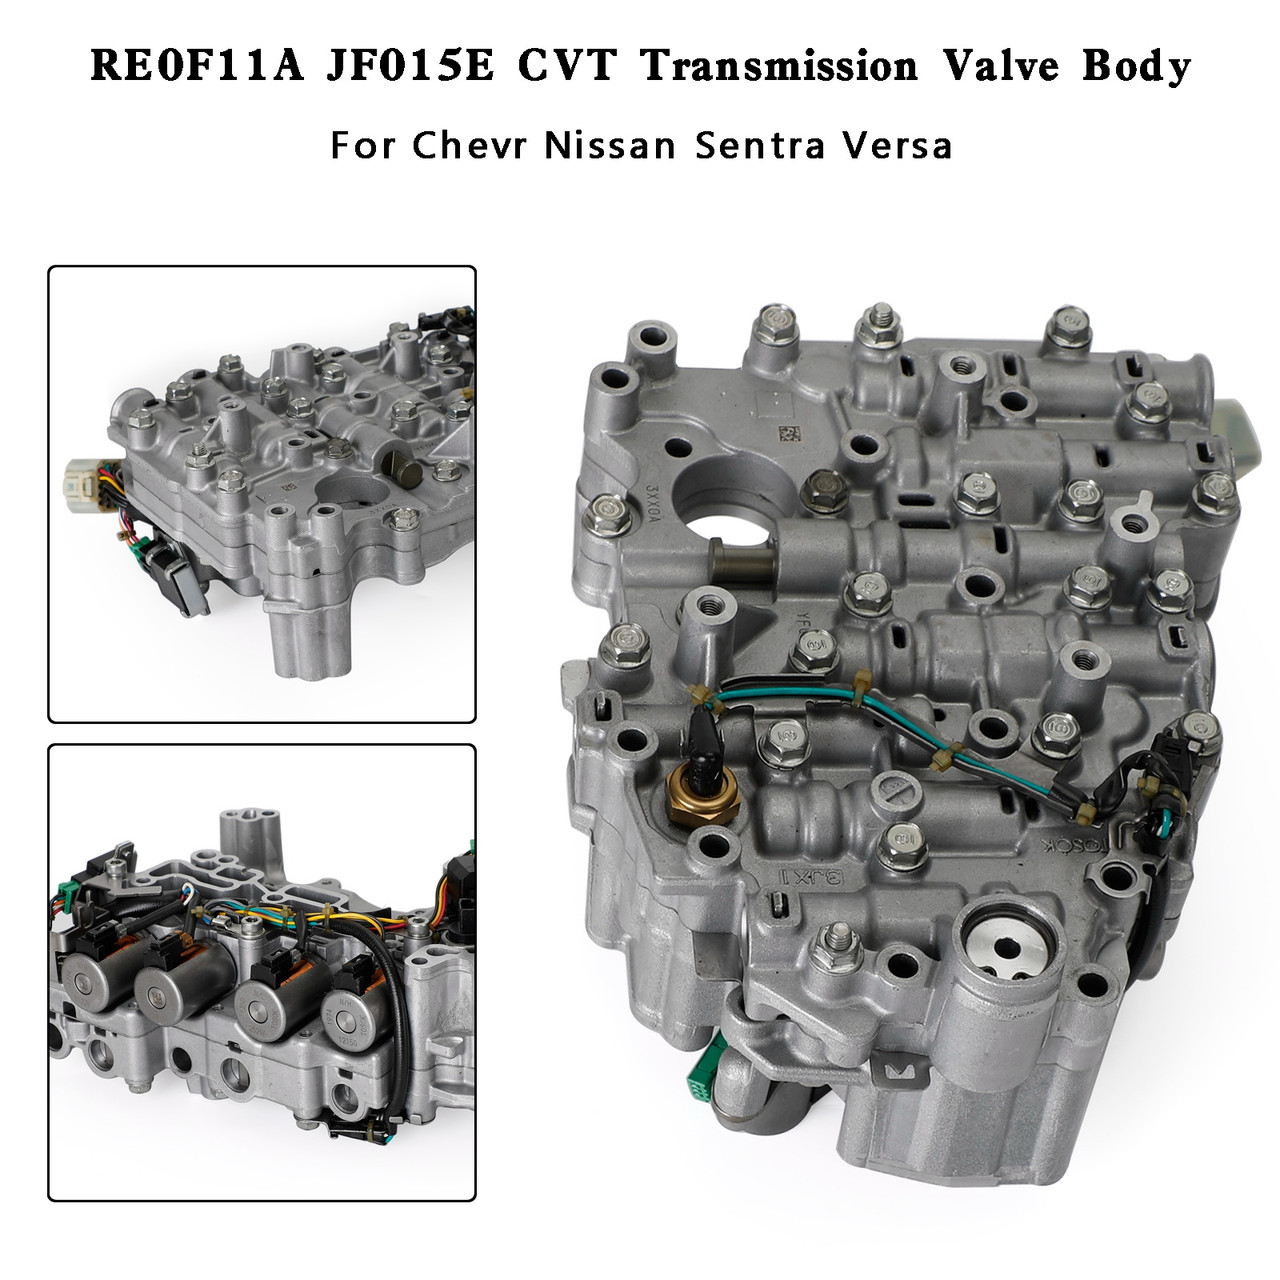 RE0F11A JF015E CVT Transmission Valve Body For Chevr Nissan Sentra Versa